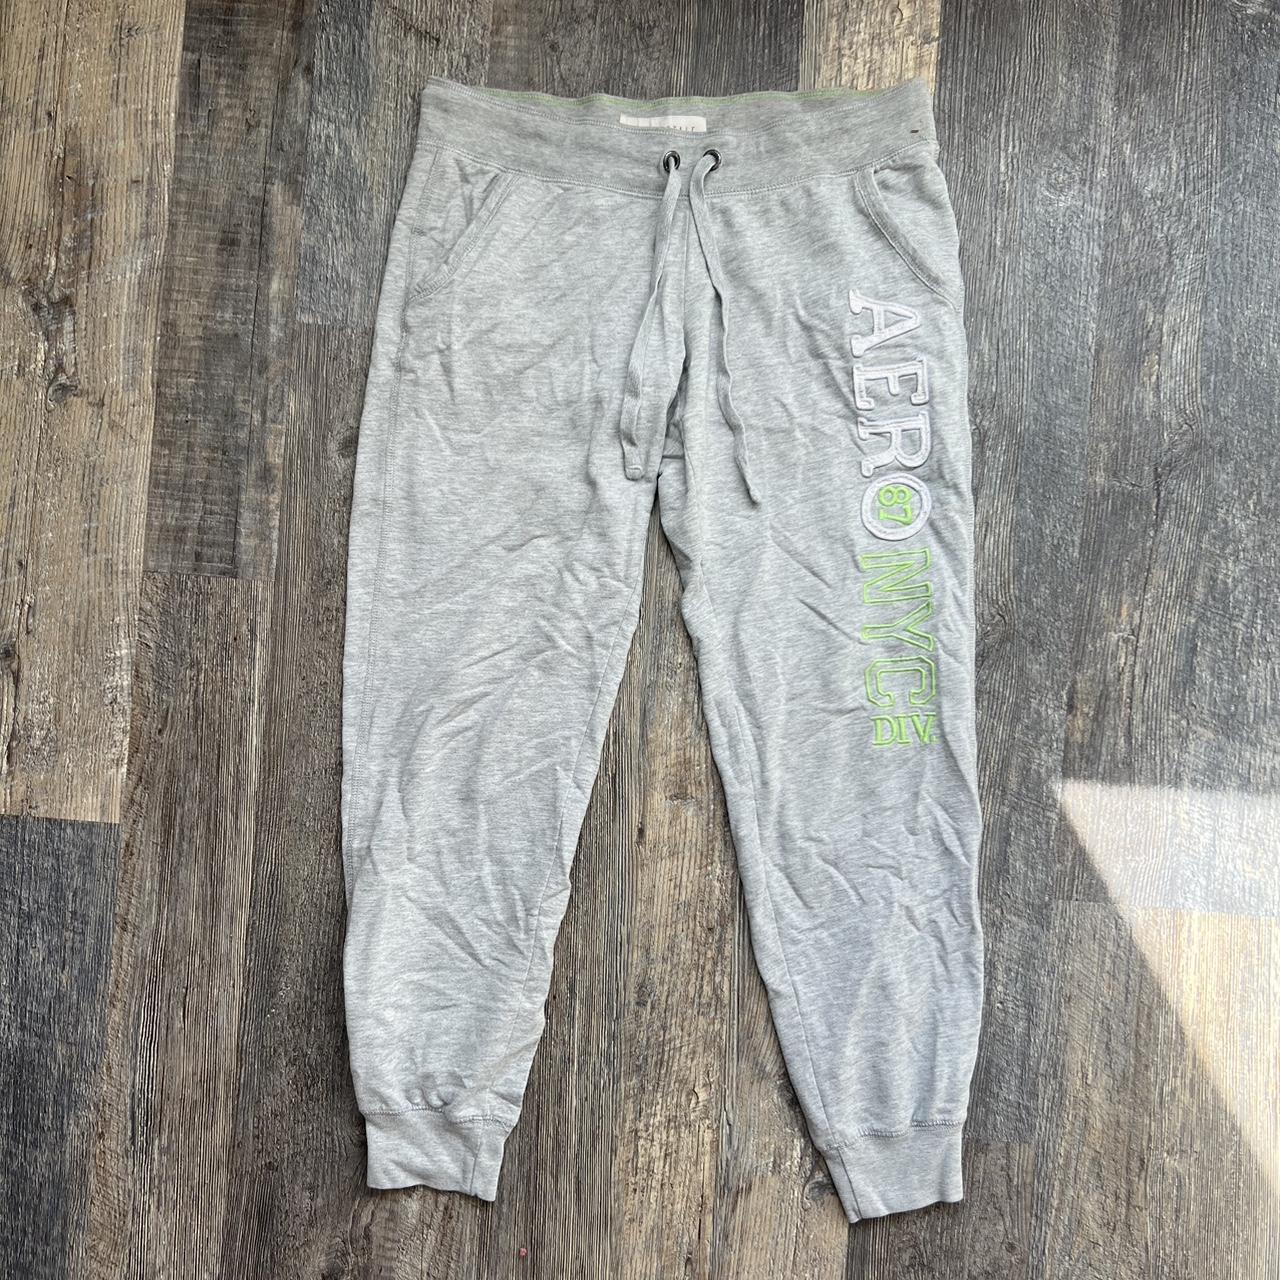 Aeropostale grey sweatpants. Good condition. Size - Depop